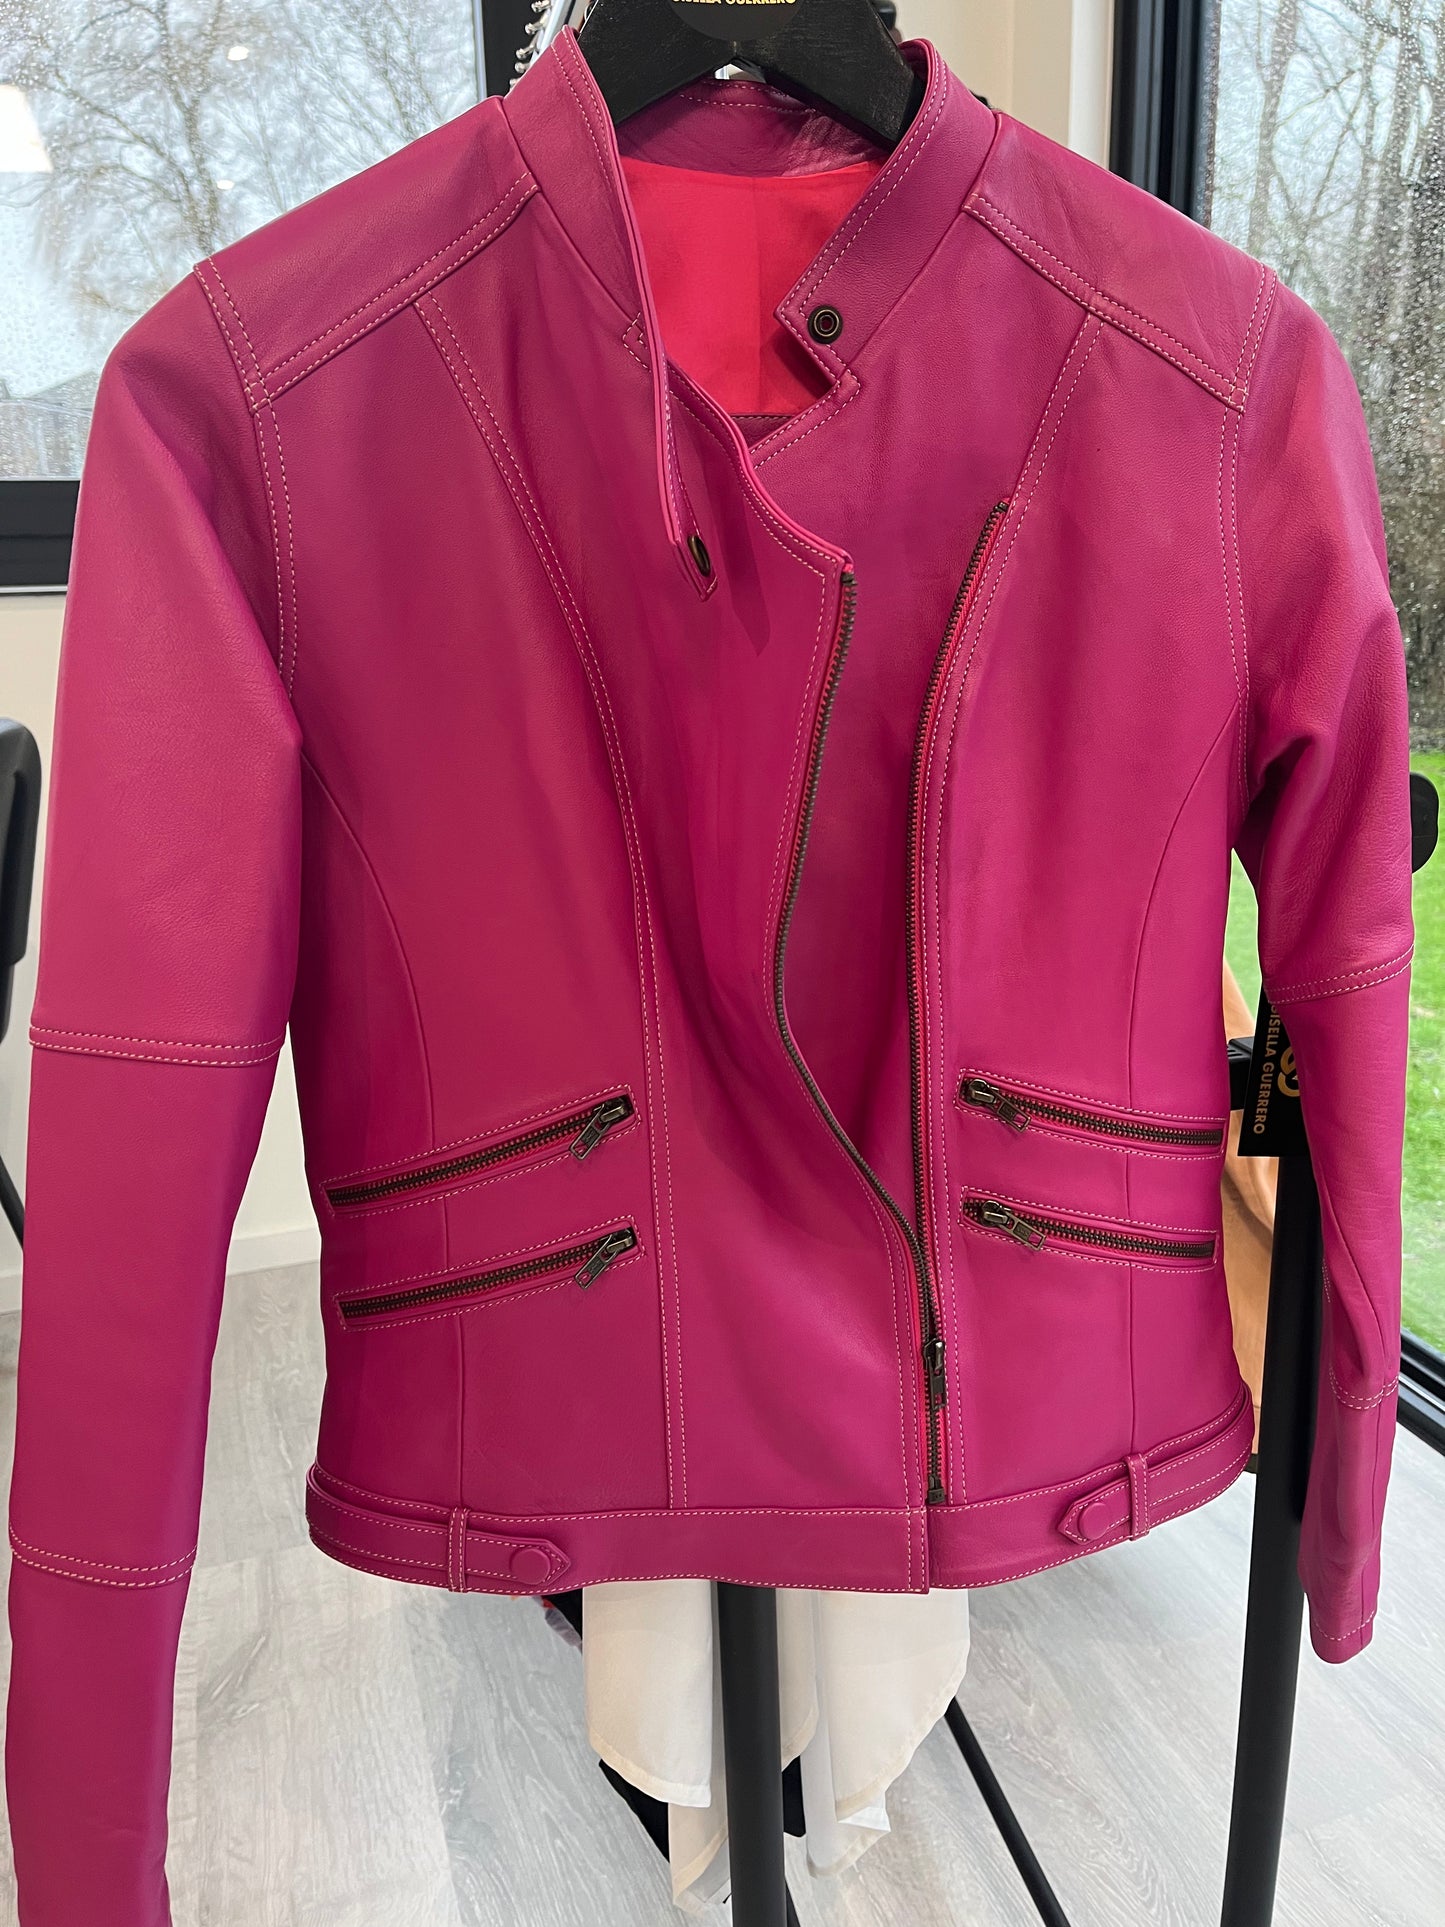 GG016: P*nk Leather Jacket